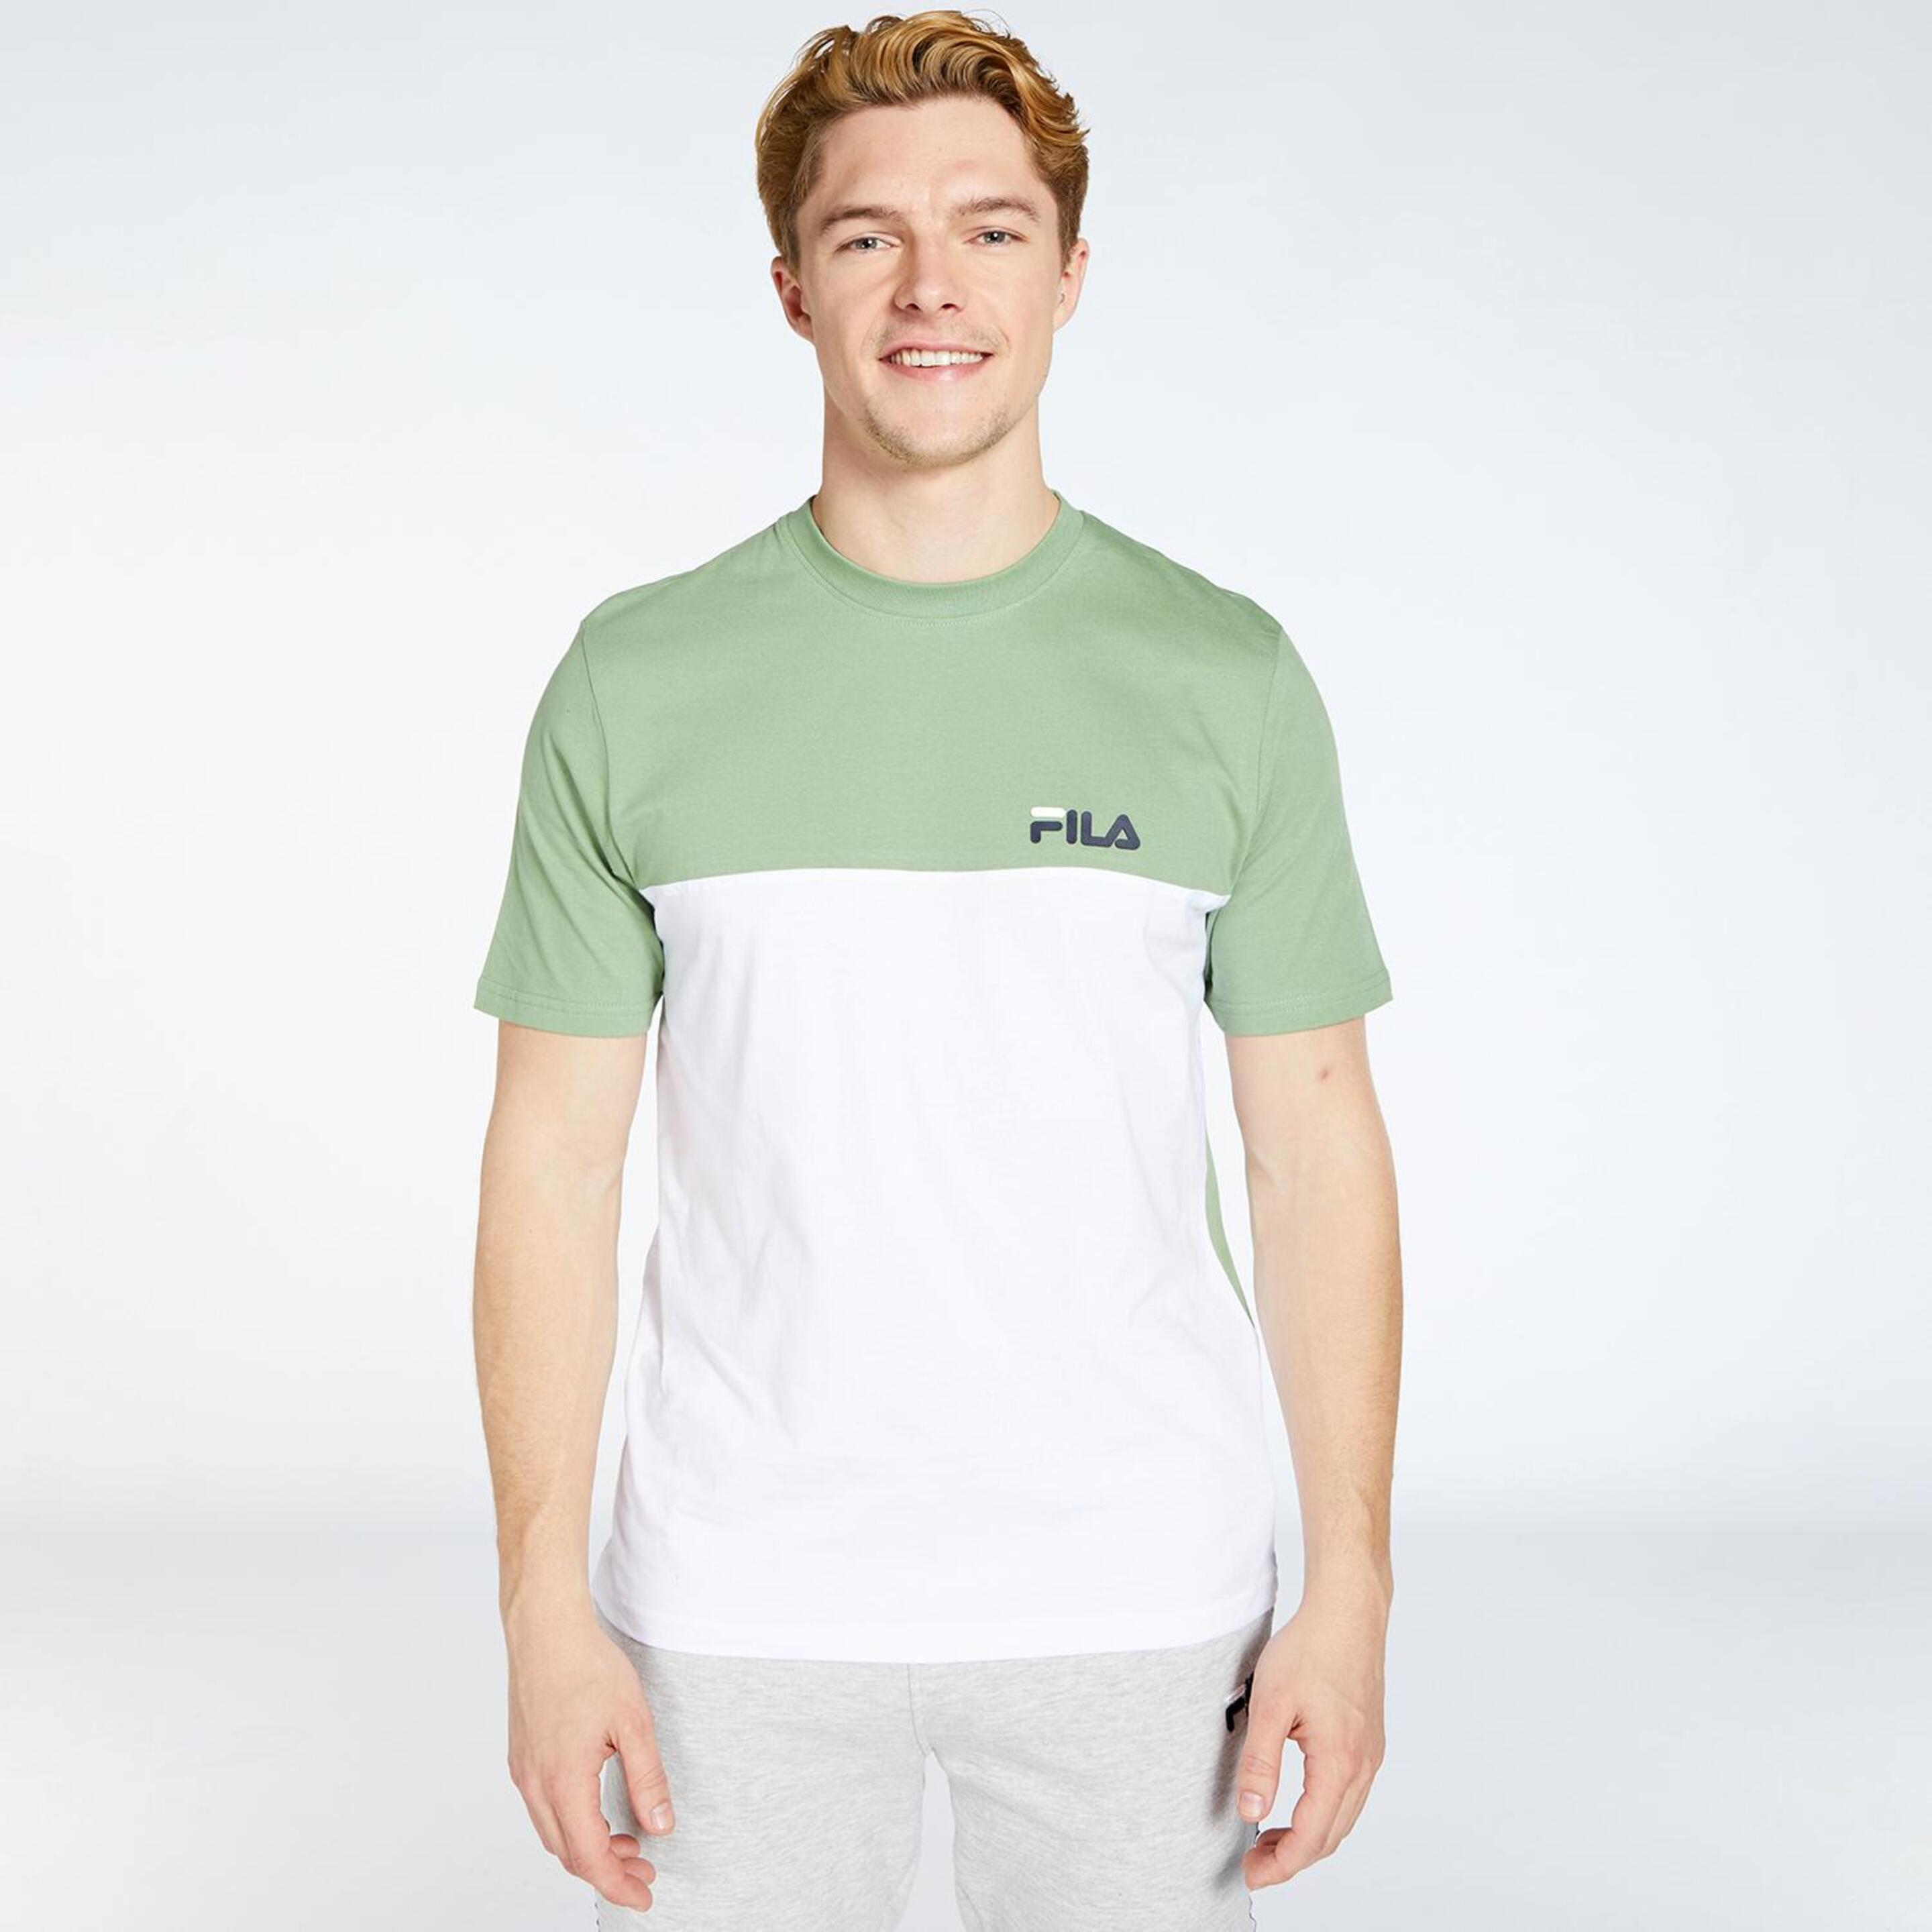 Fila Clinton - verde - Camiseta Hombre